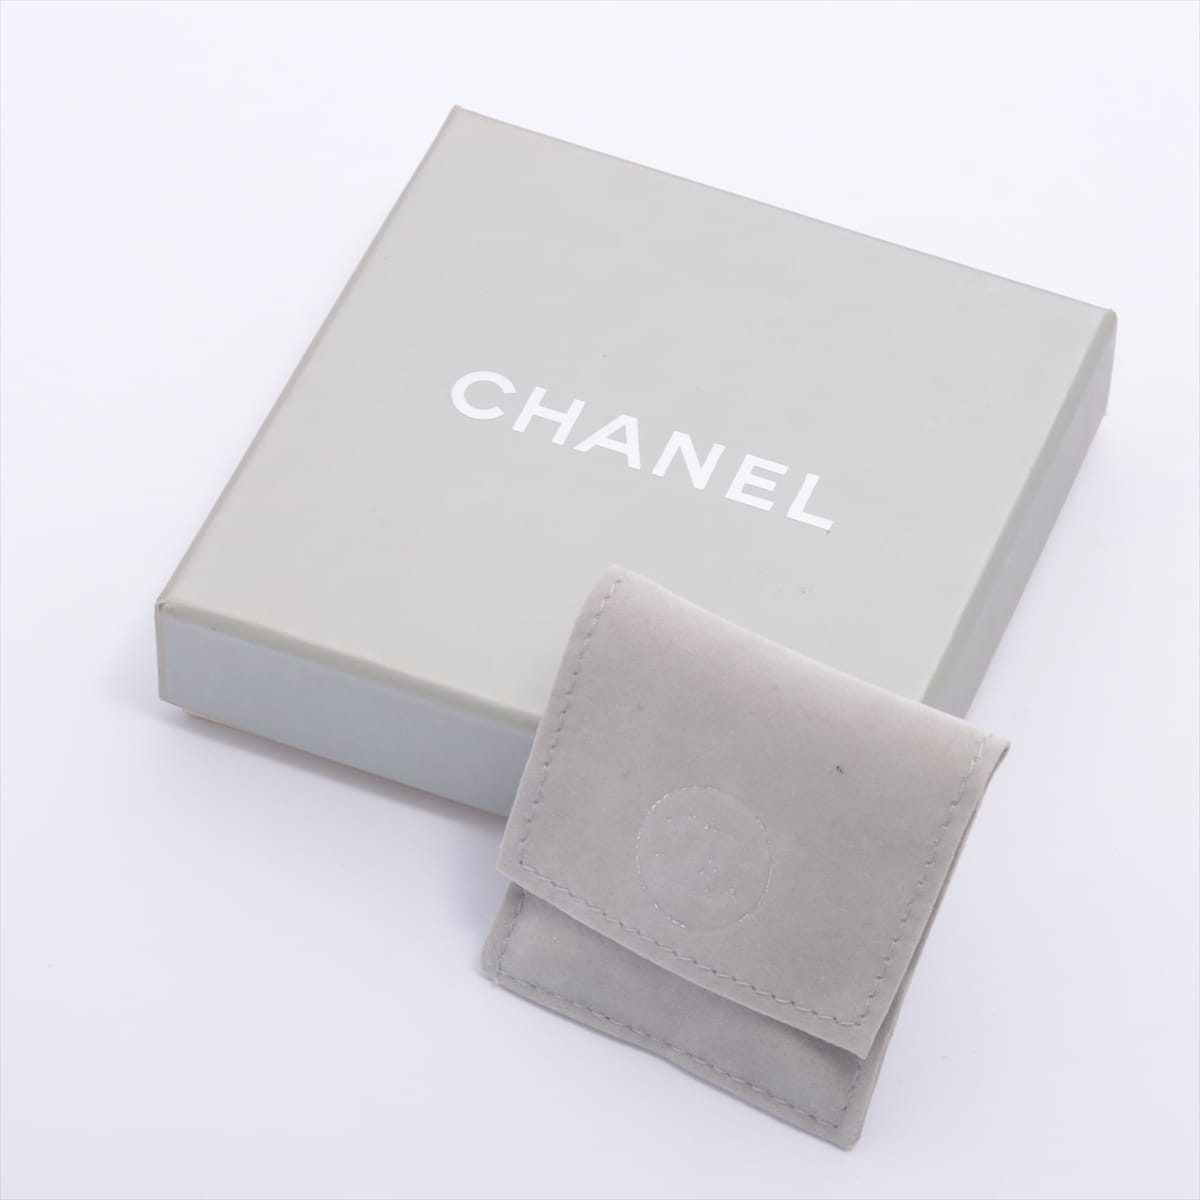 Chanel Logo rings 925 17.2g Silver